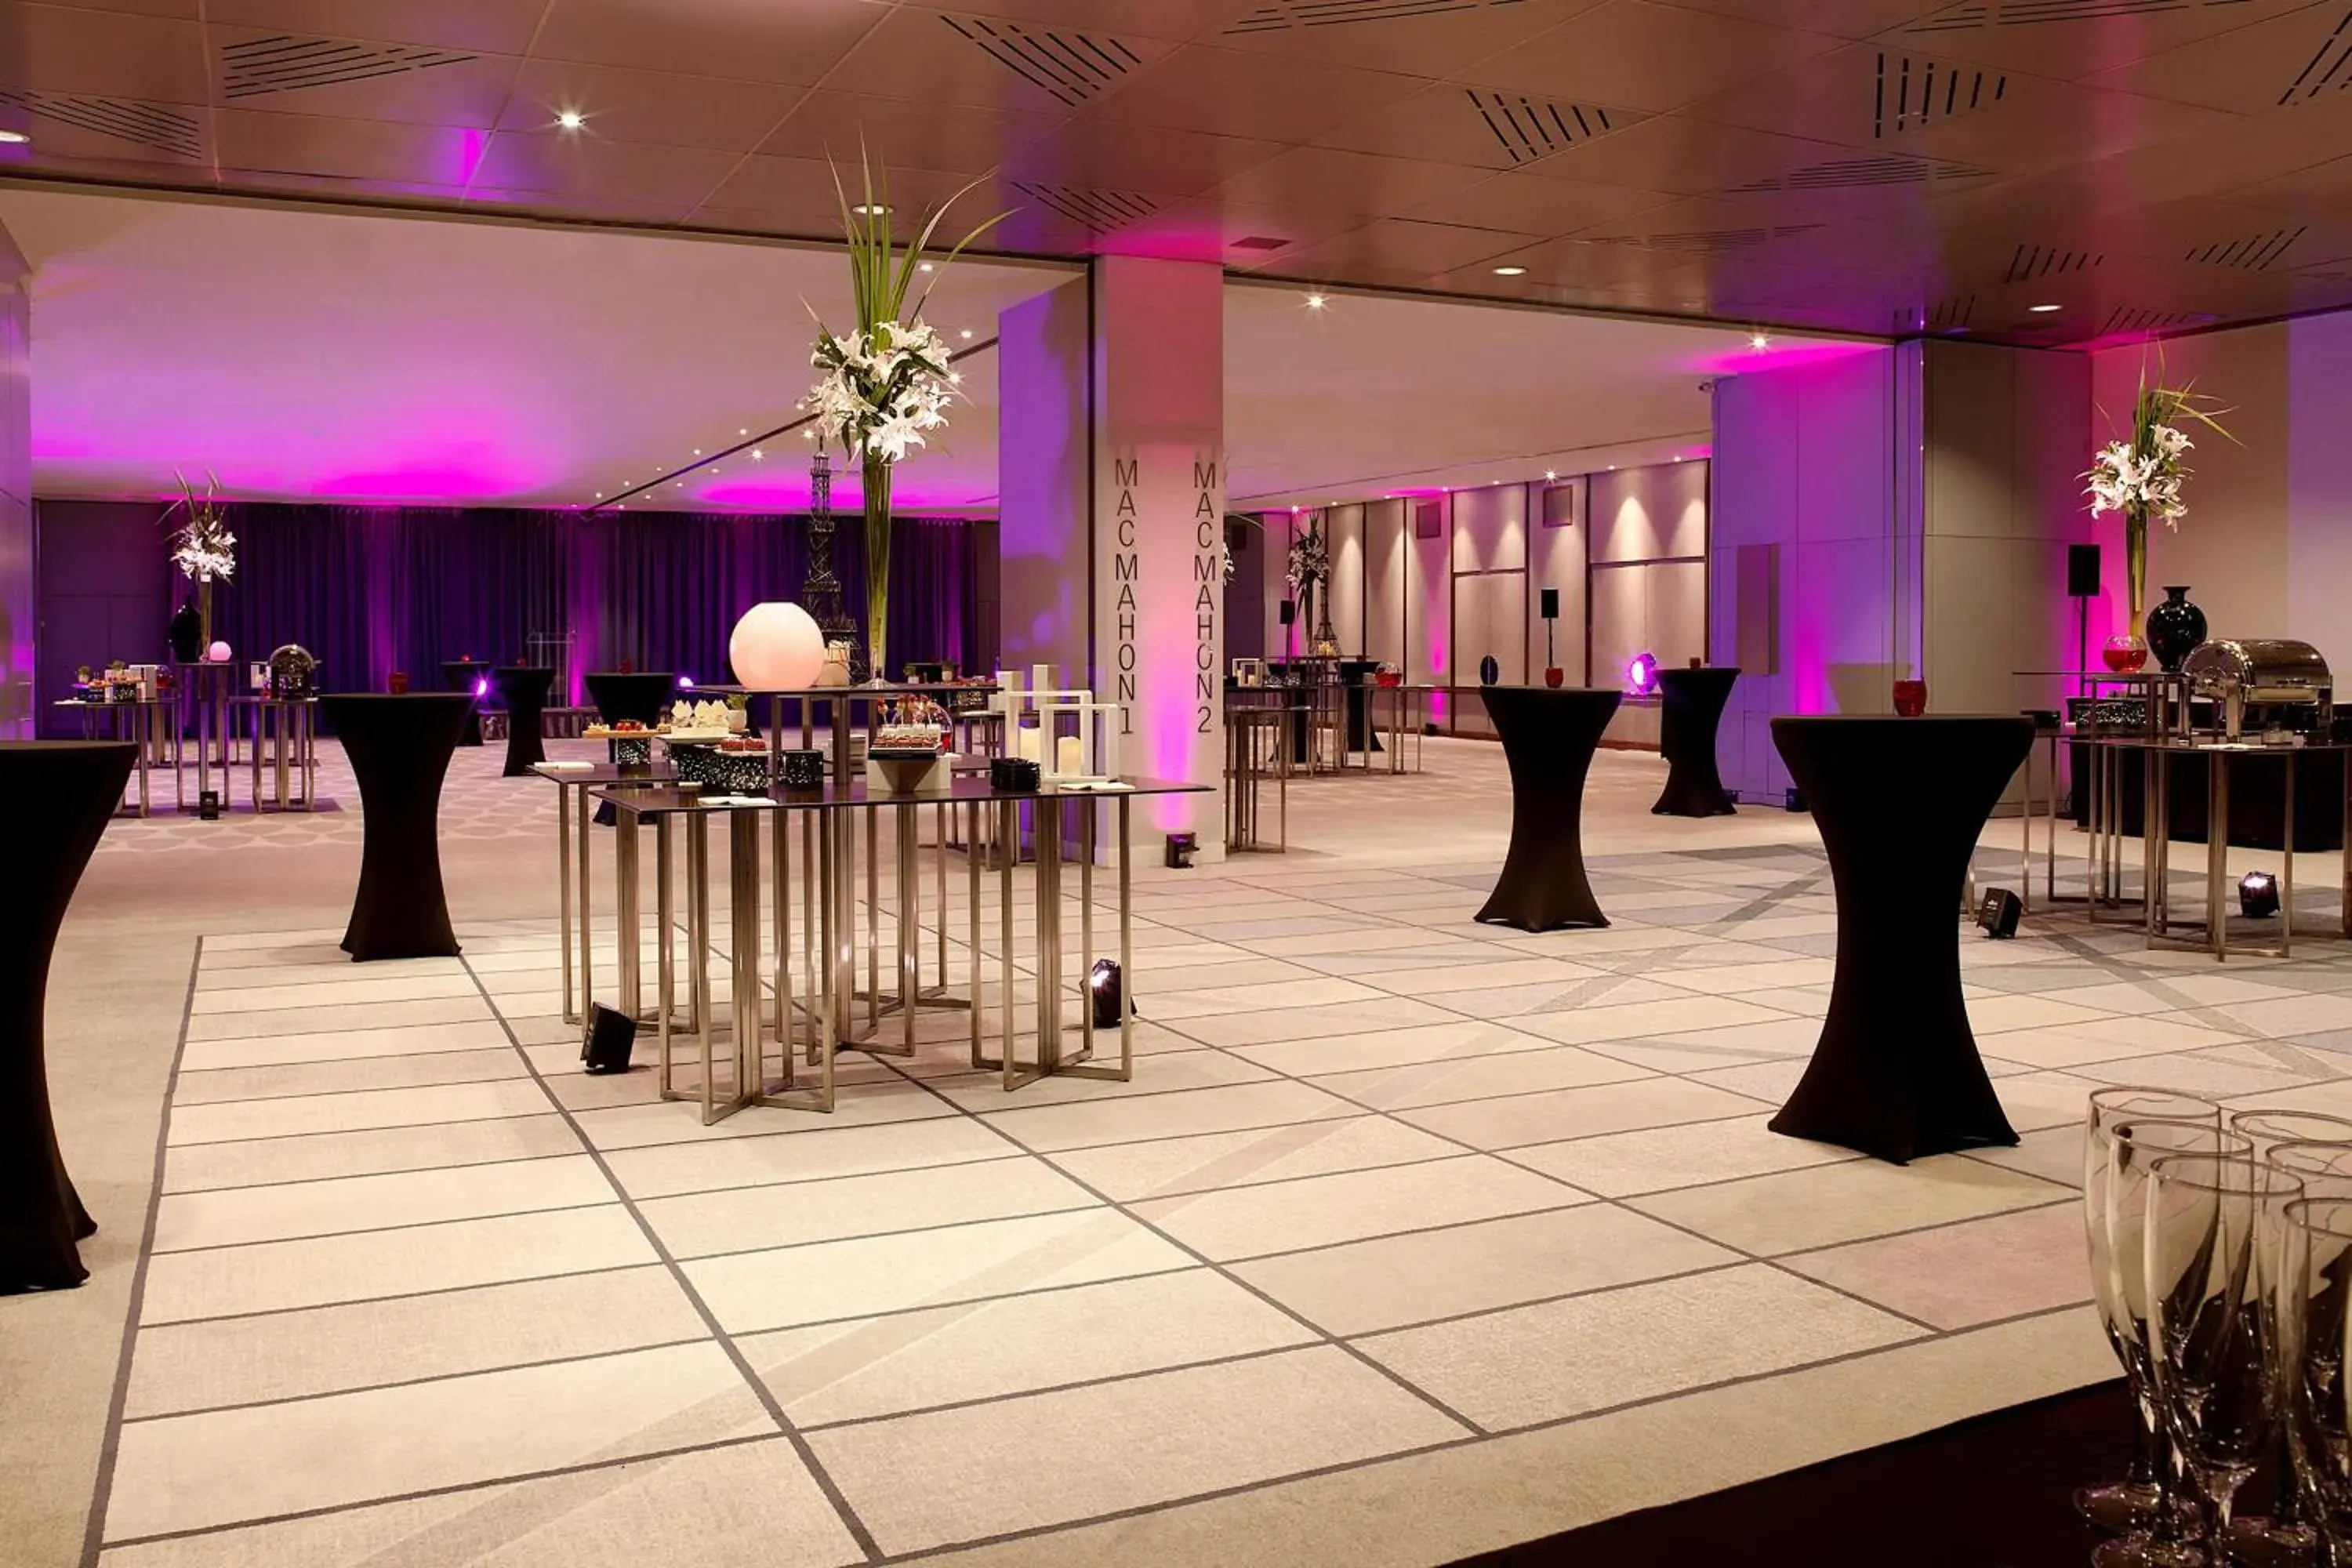 Lobby or reception in Le Meridien Etoile